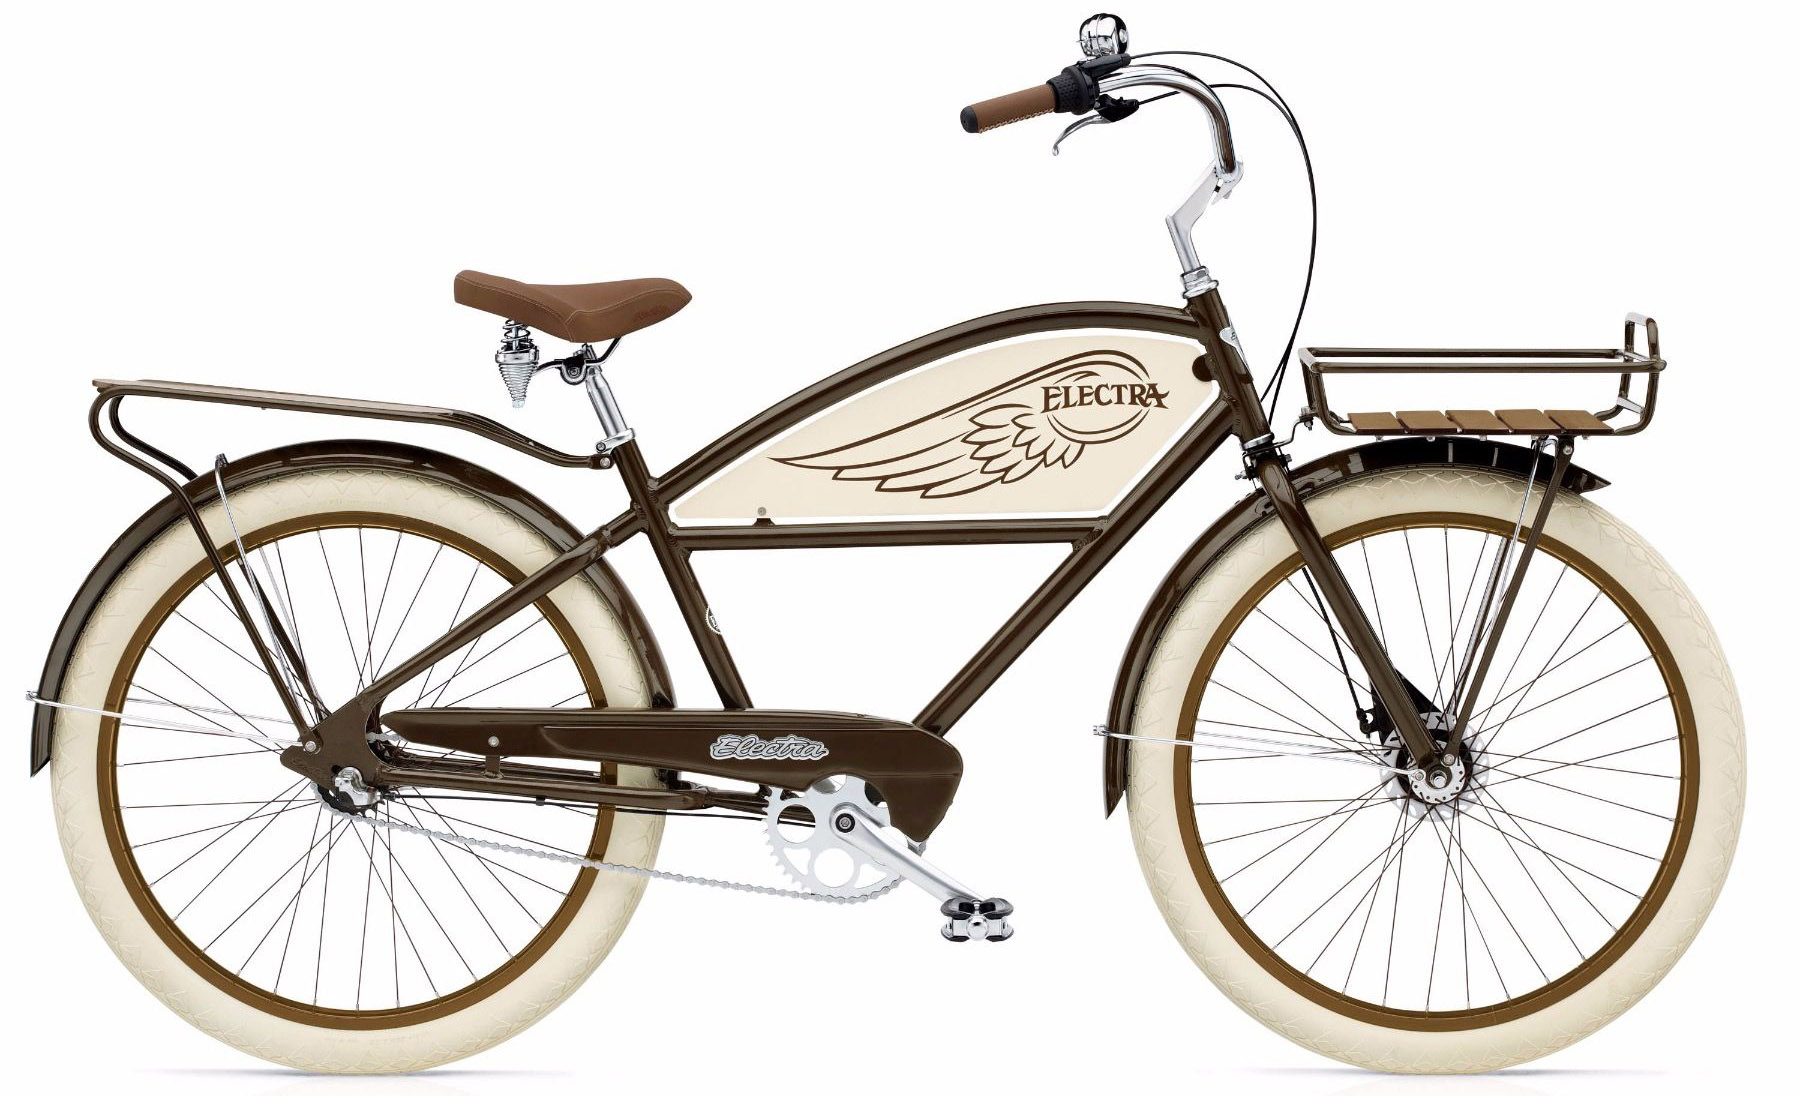  Велосипед Electra Delivery 3i 2020